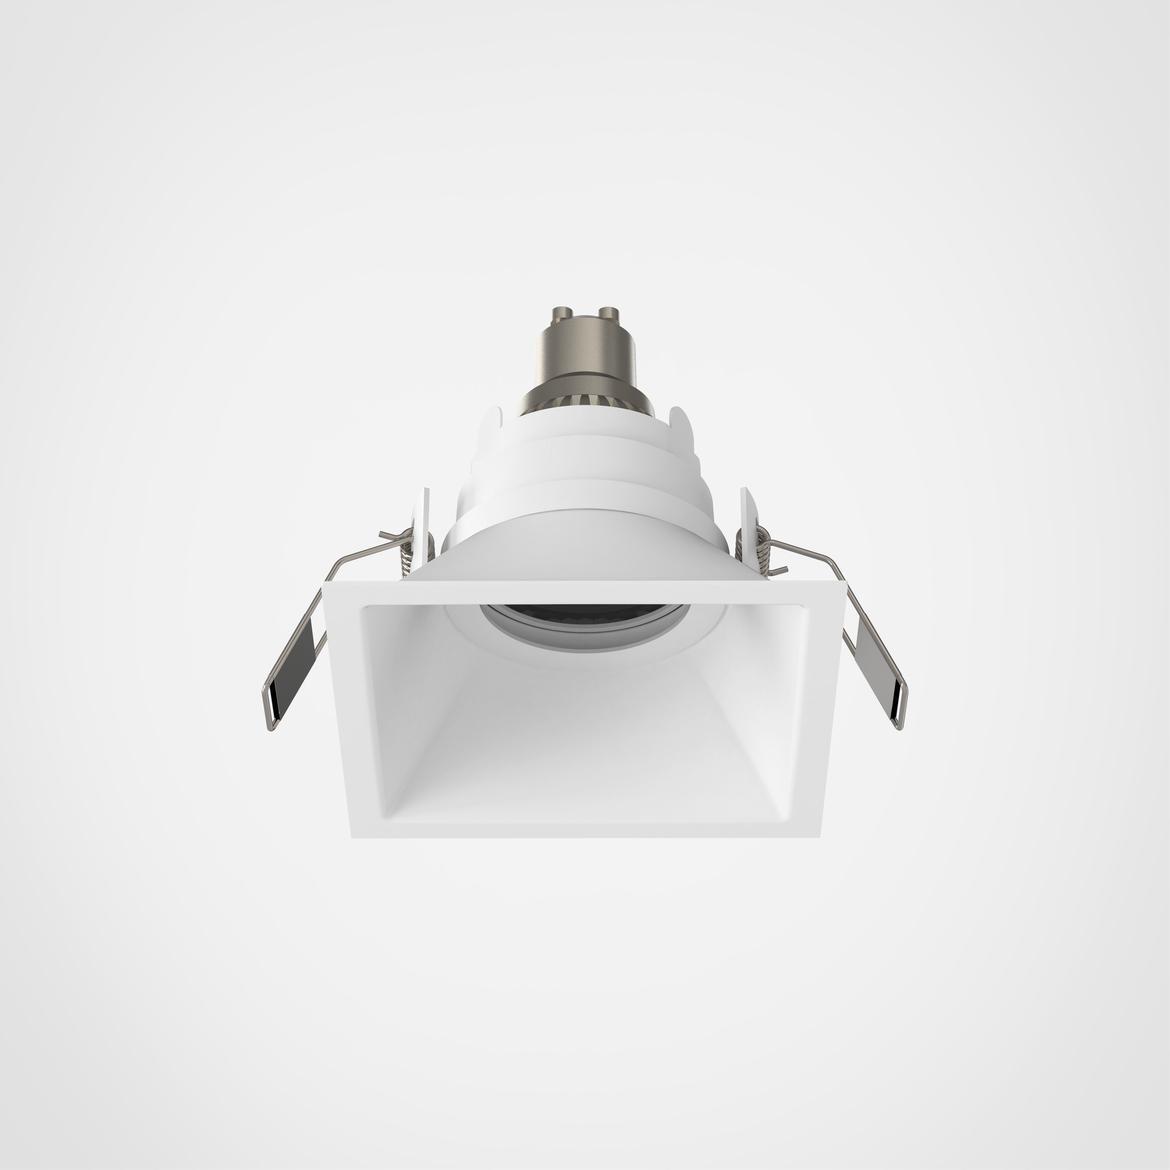 Downlight svítidlo Minima Slimline Square fixní protipožární IP65 6W GU10 bílá - ASTRO